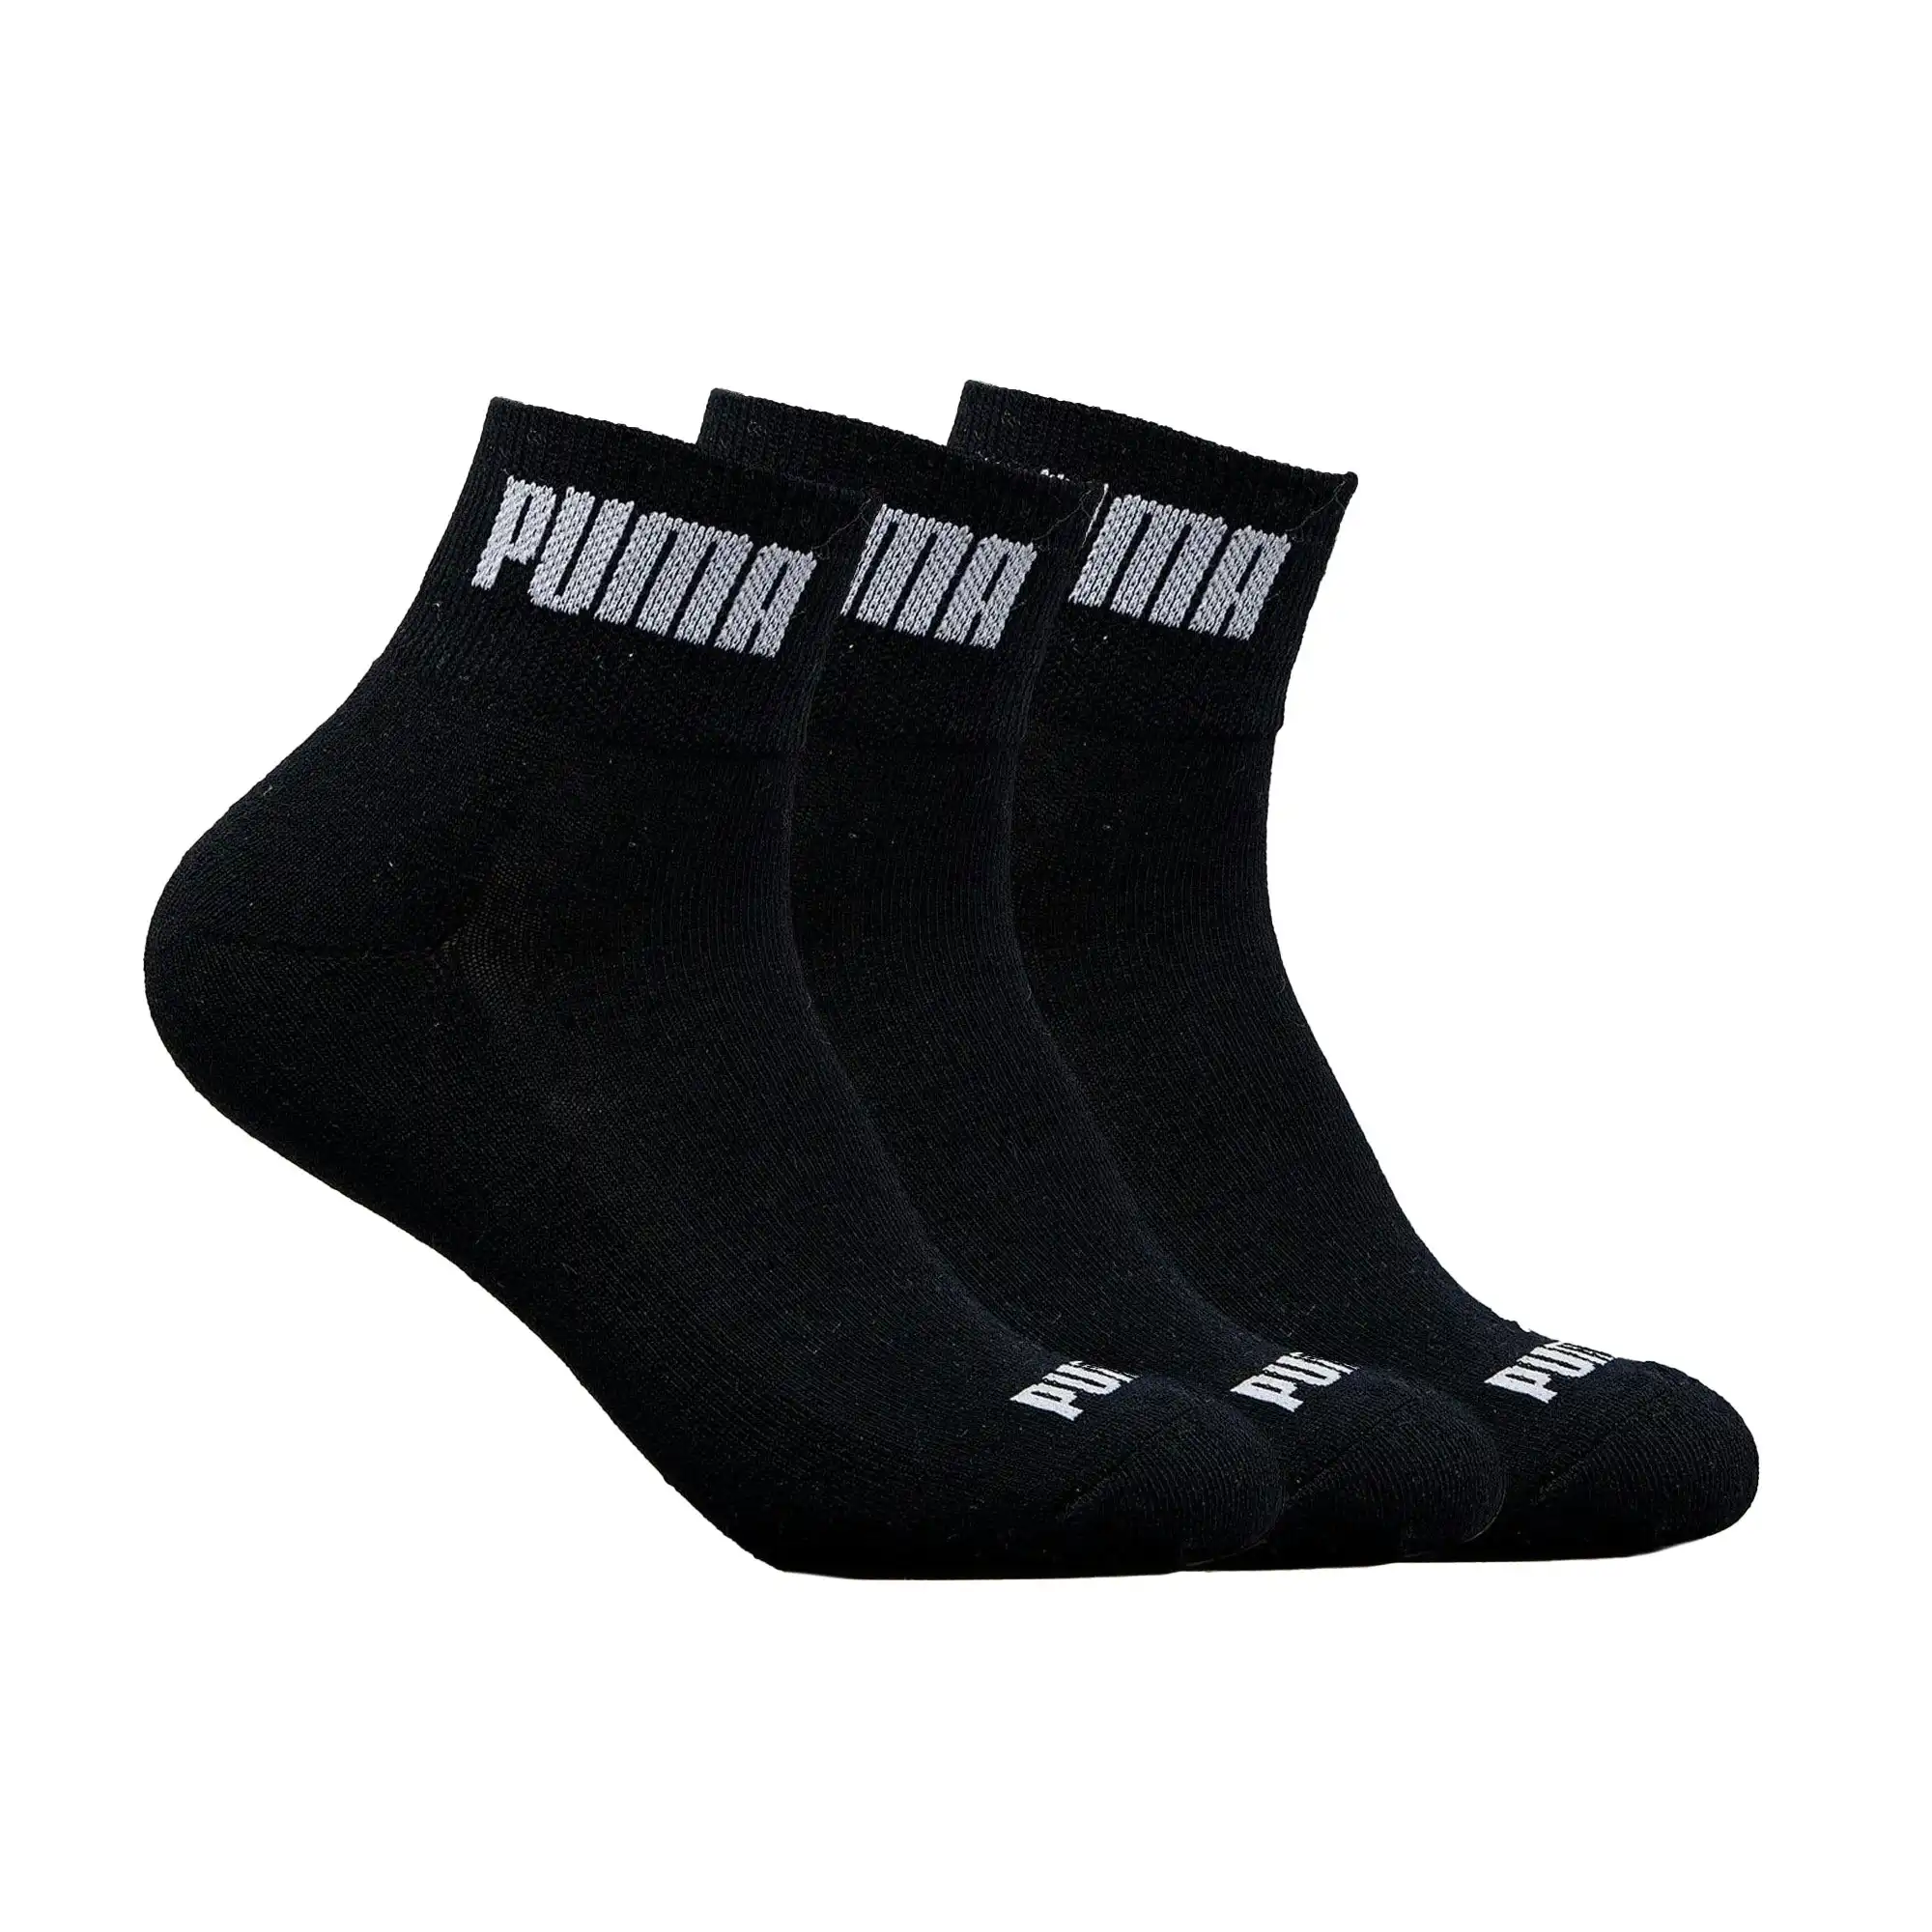 Puma Mens Quarter Socks (Pack of 3)